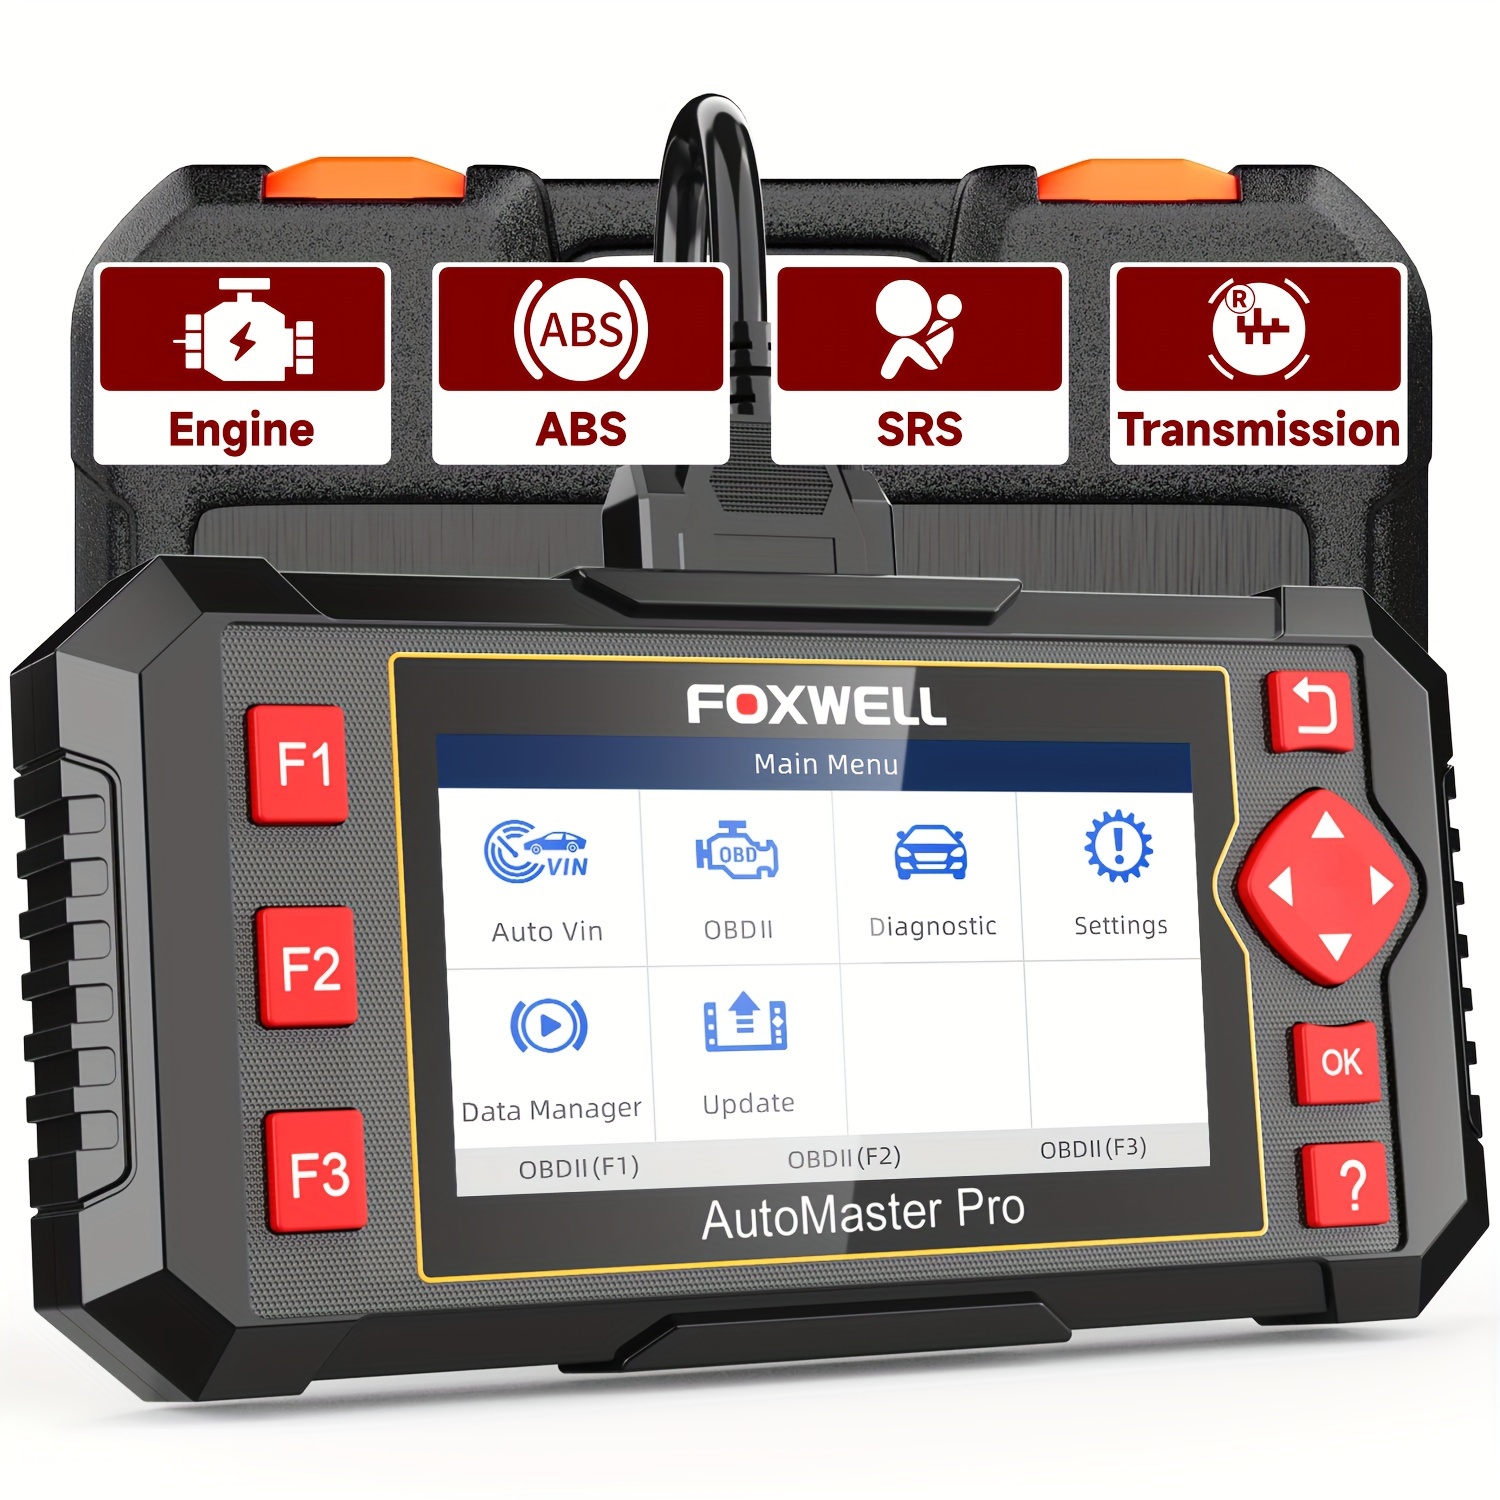 Foxwell NT630 Plus SRS SAS ABS Bleeding OBD2 Scanner Code Reader Diagnostic  Tool